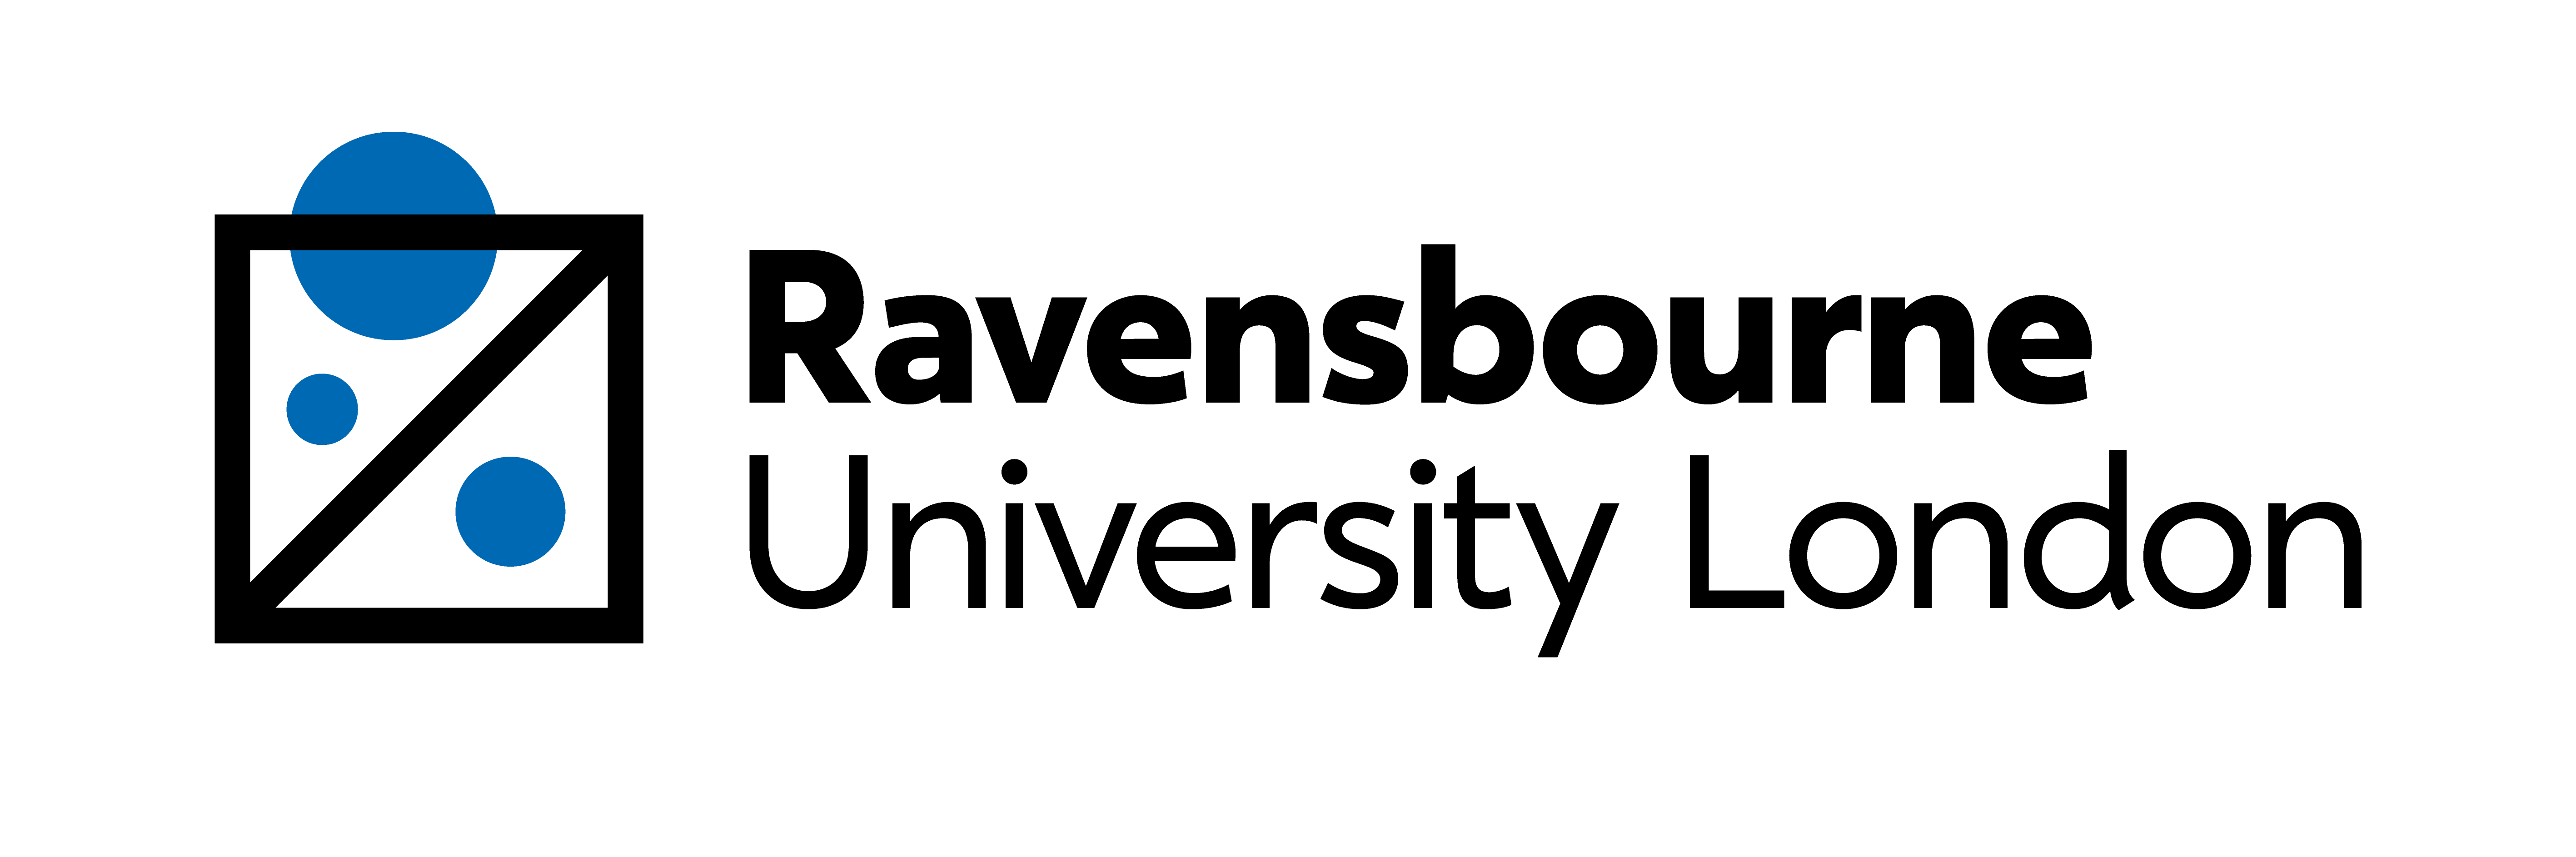 Ravensbourne logo